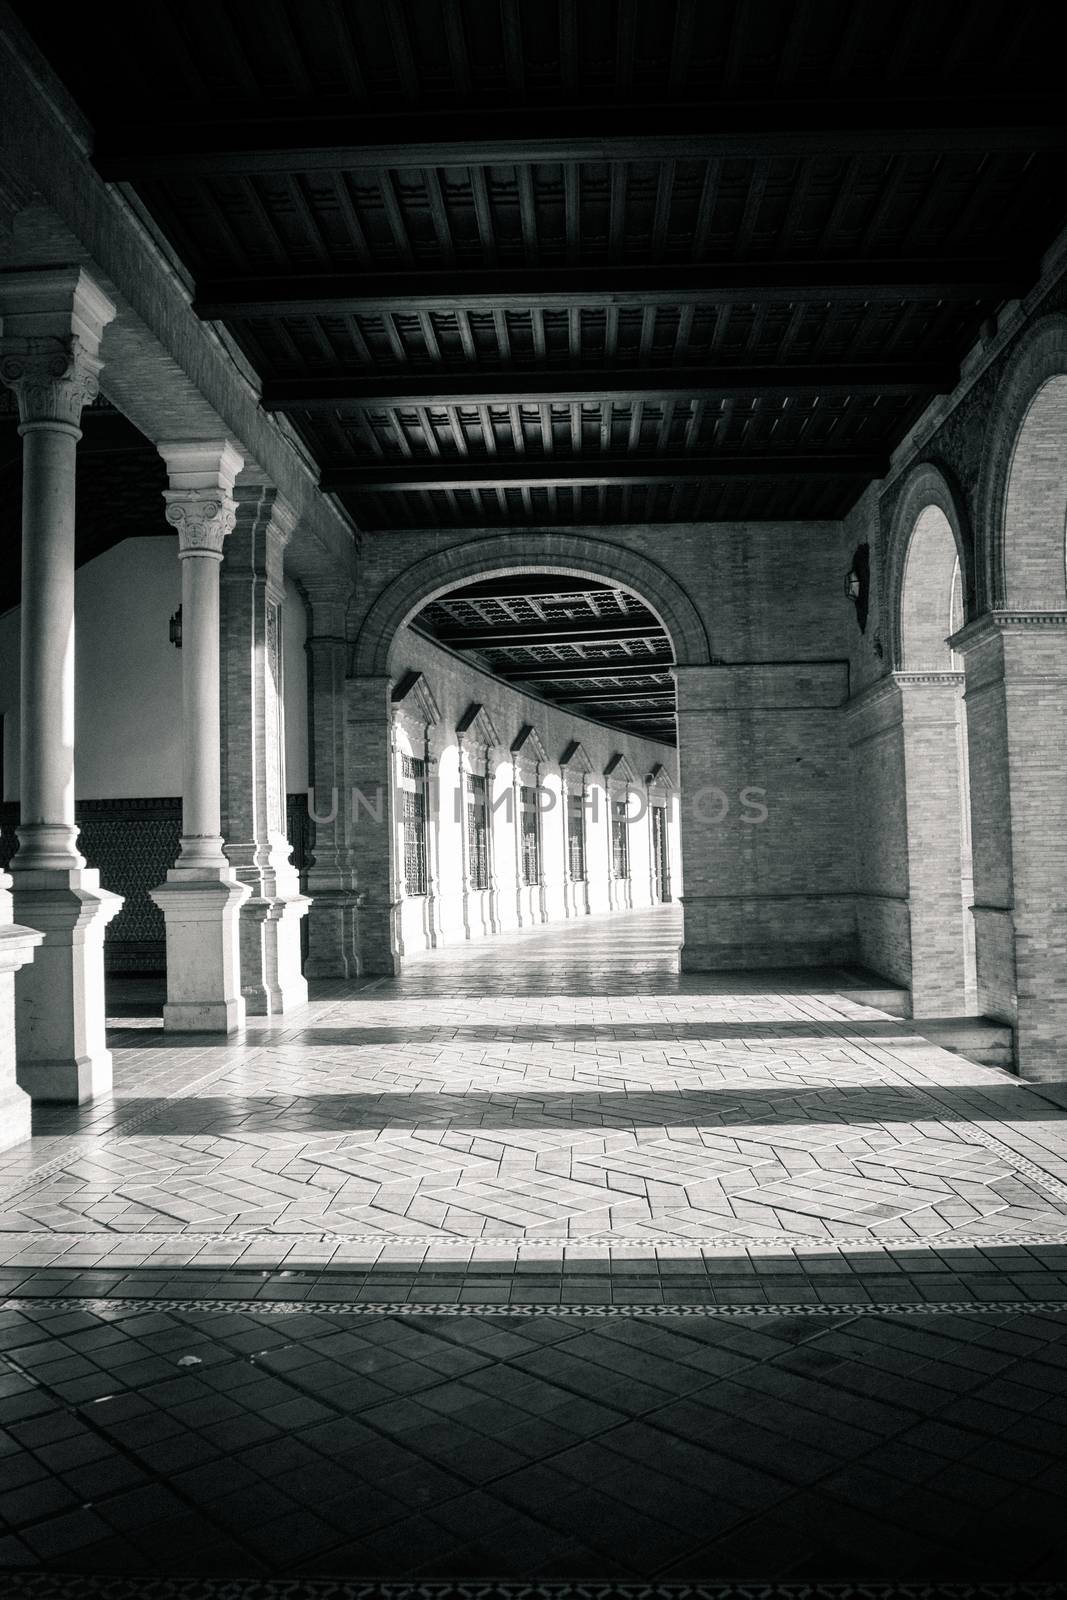 Corridors and pillars in Plaza de Espana in Seville, Spain, Europe